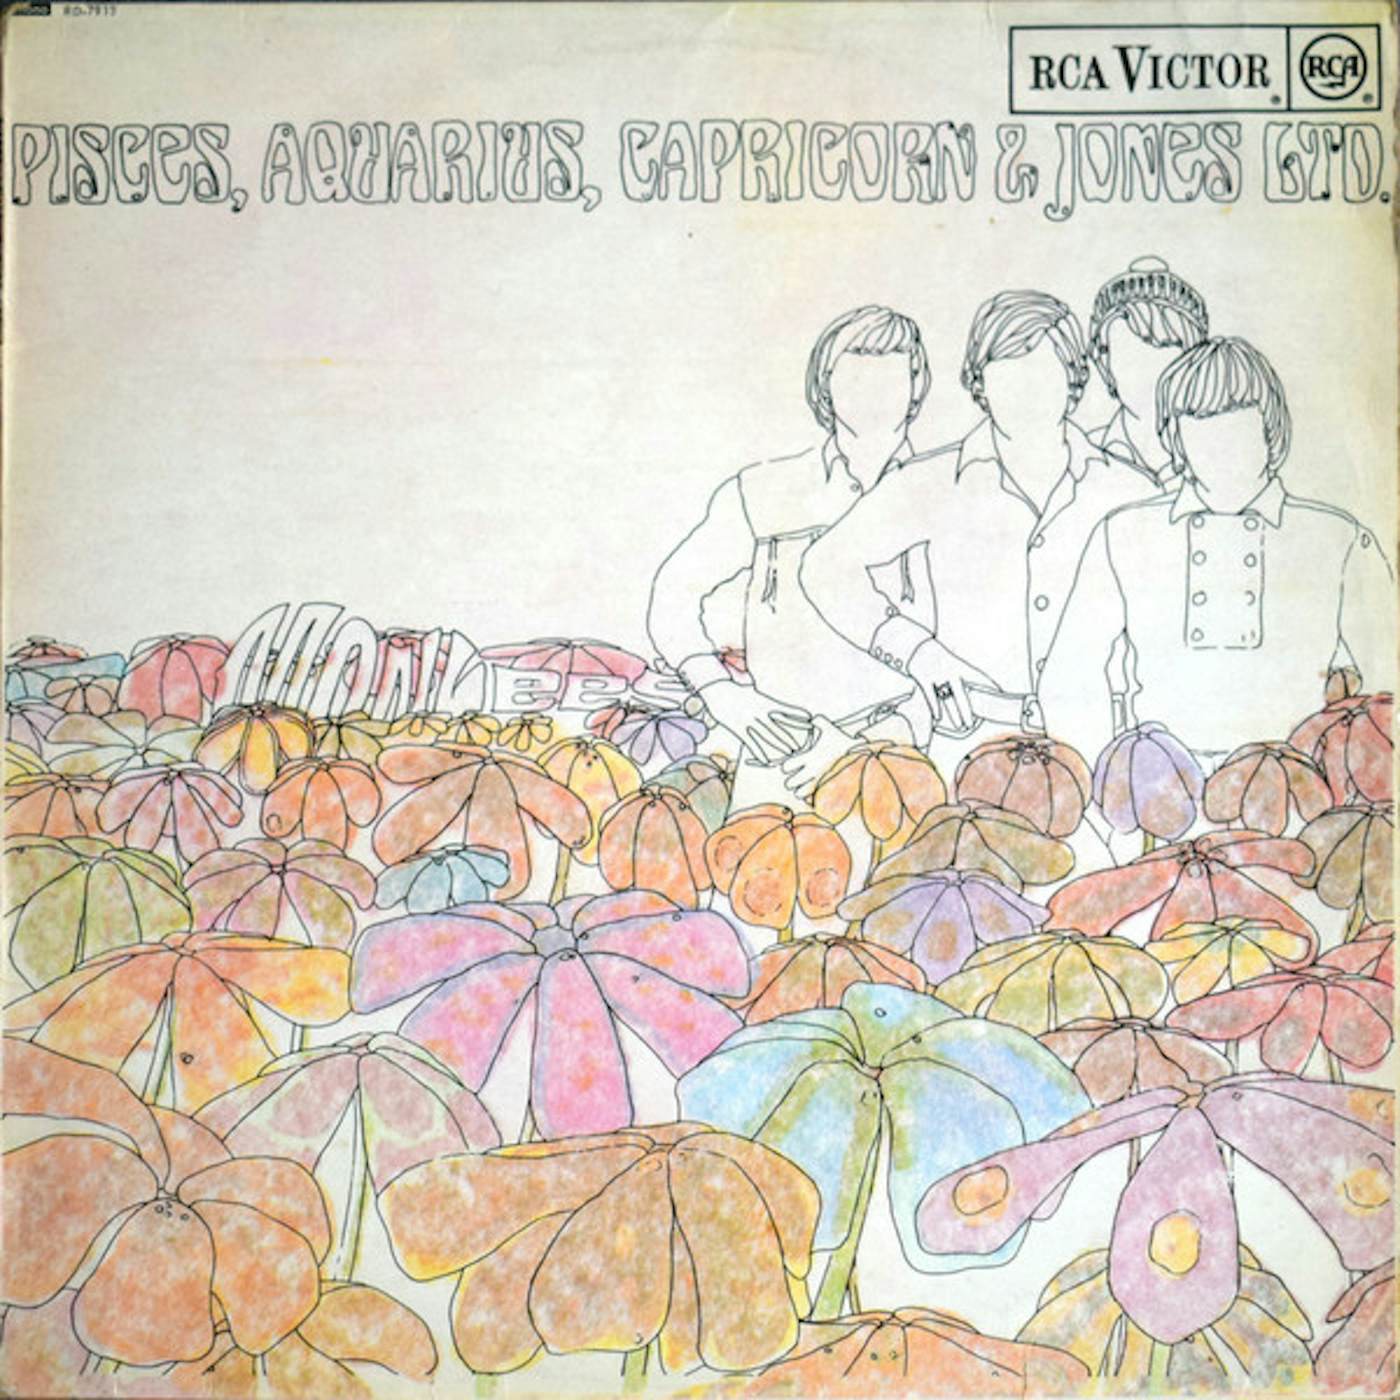 The Monkees PISCES, AQUARIUS, CAPRICORN & JONES LTD. (TURQUOISE AQUA VINYL/LIMITED ANNIVERSARY EDITION) Vinyl Record